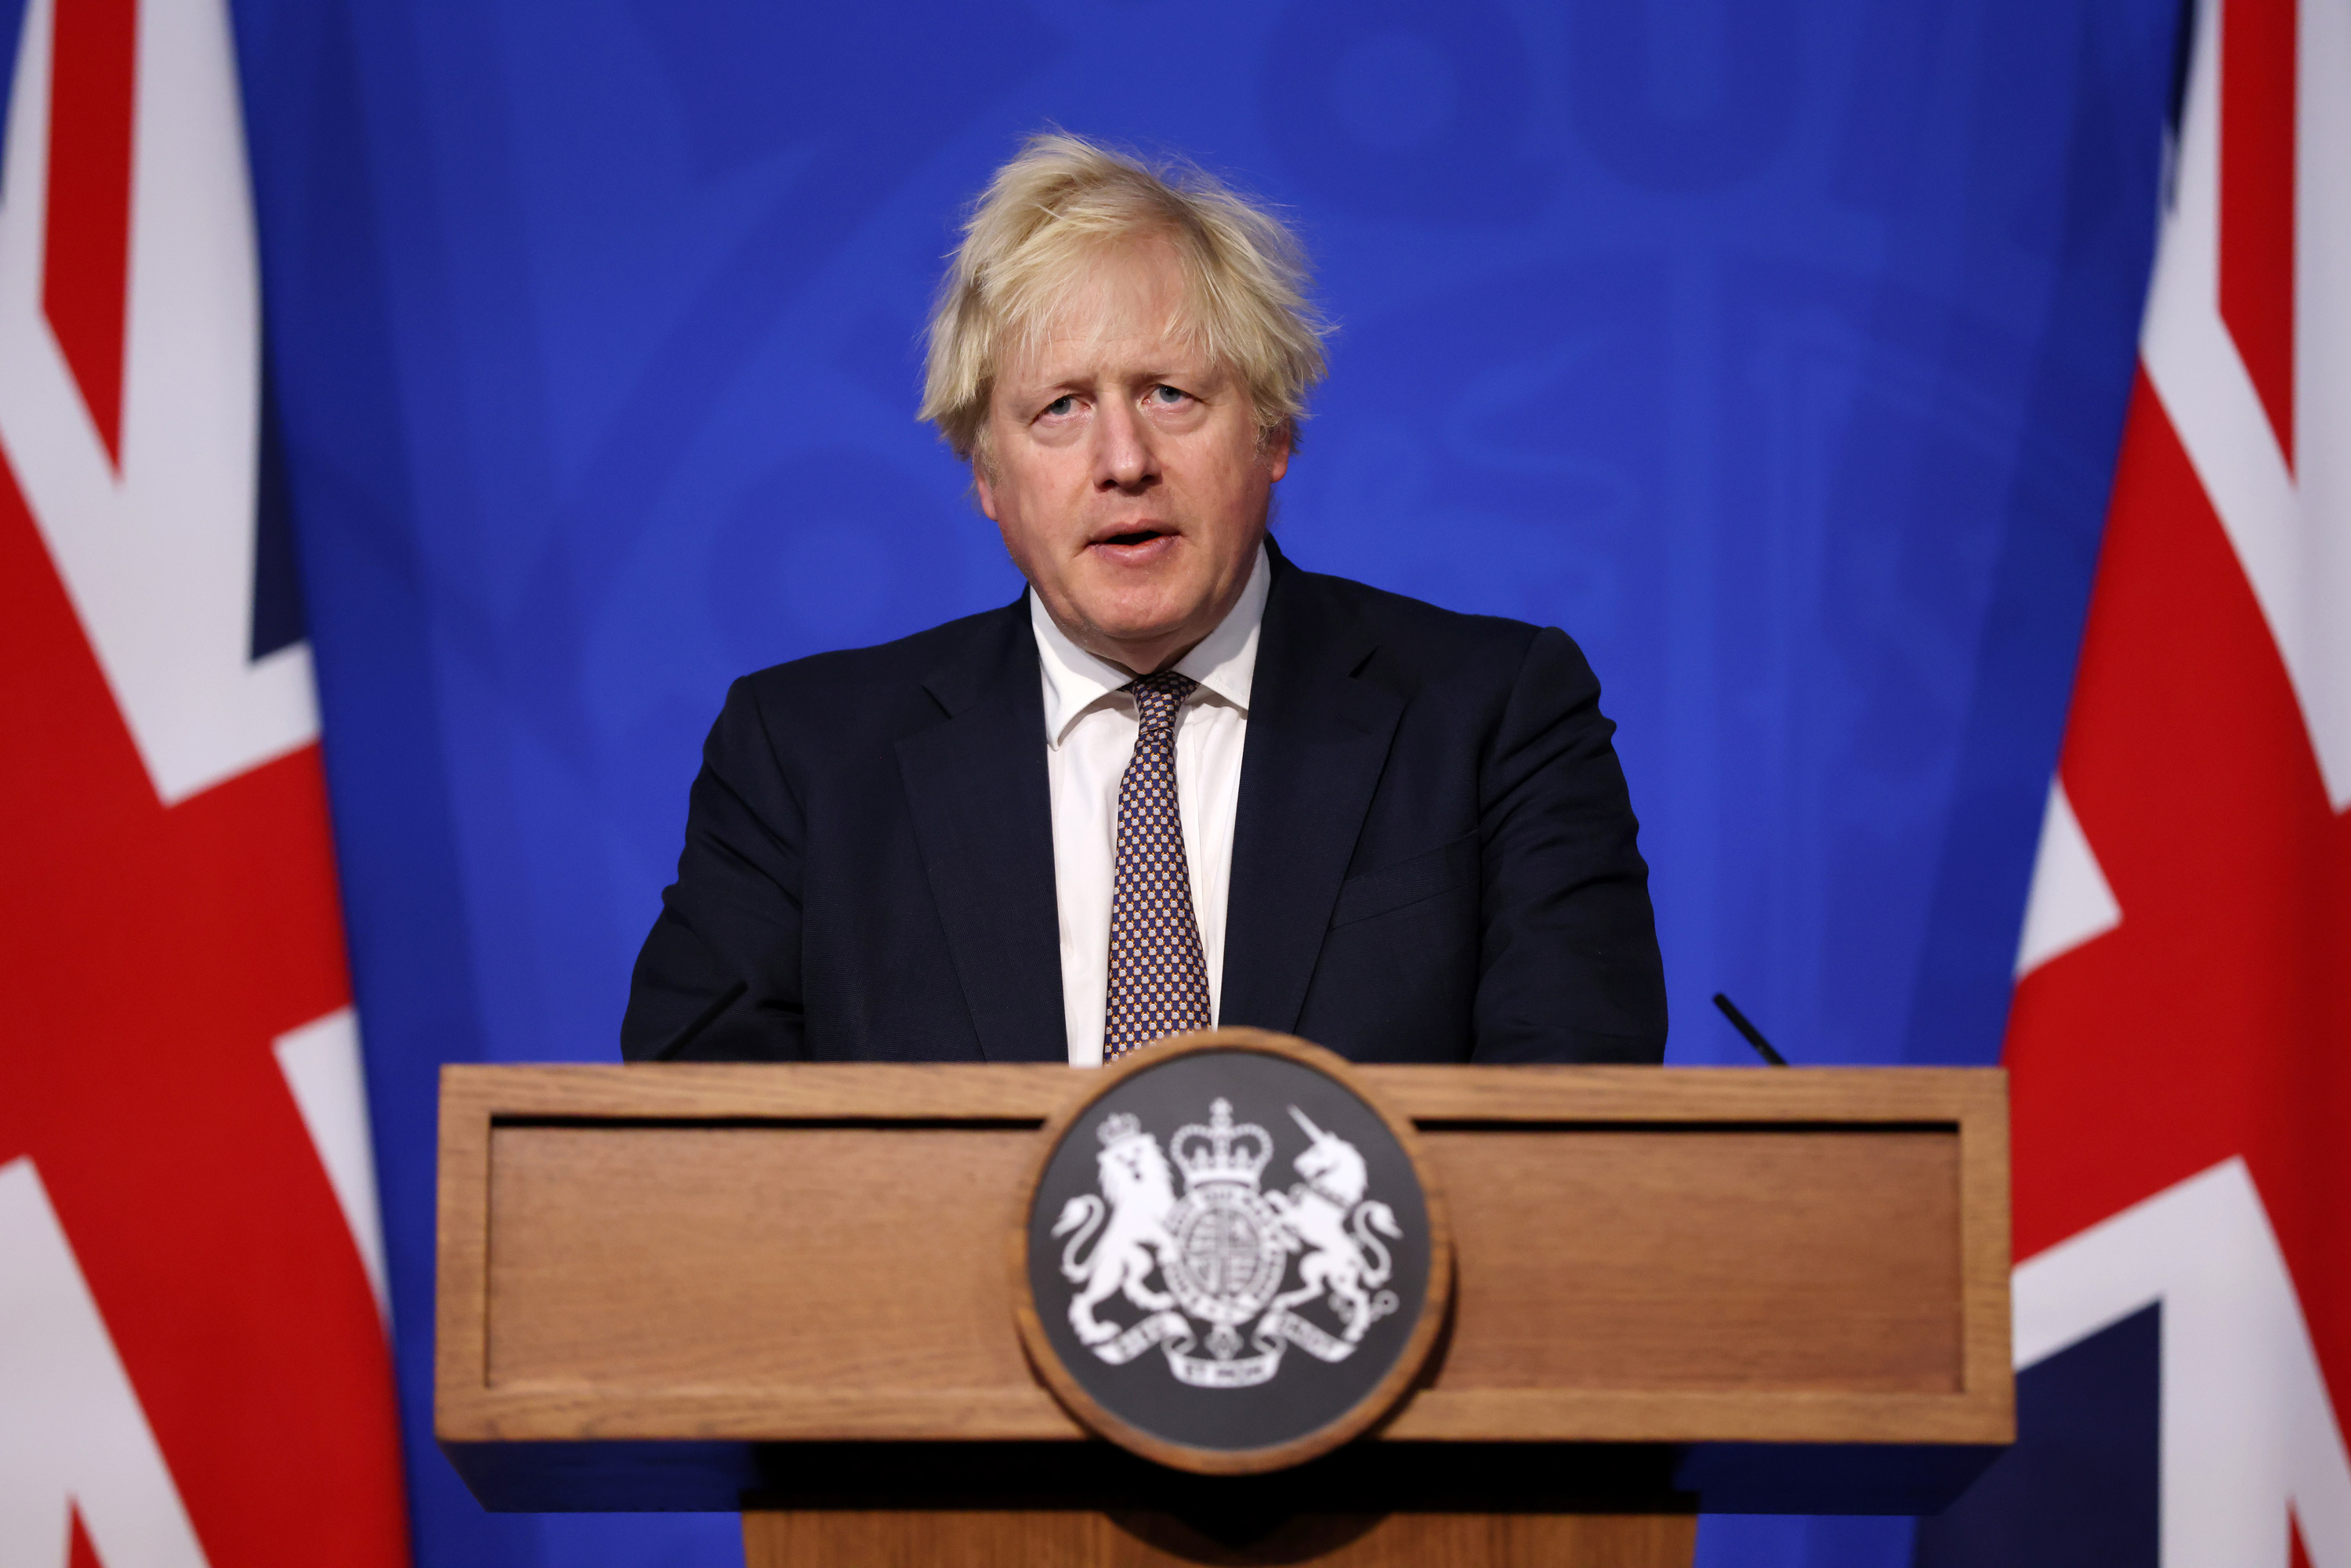 Prime Minister Boris Johnson speaks during a press conference on November 27, in London.